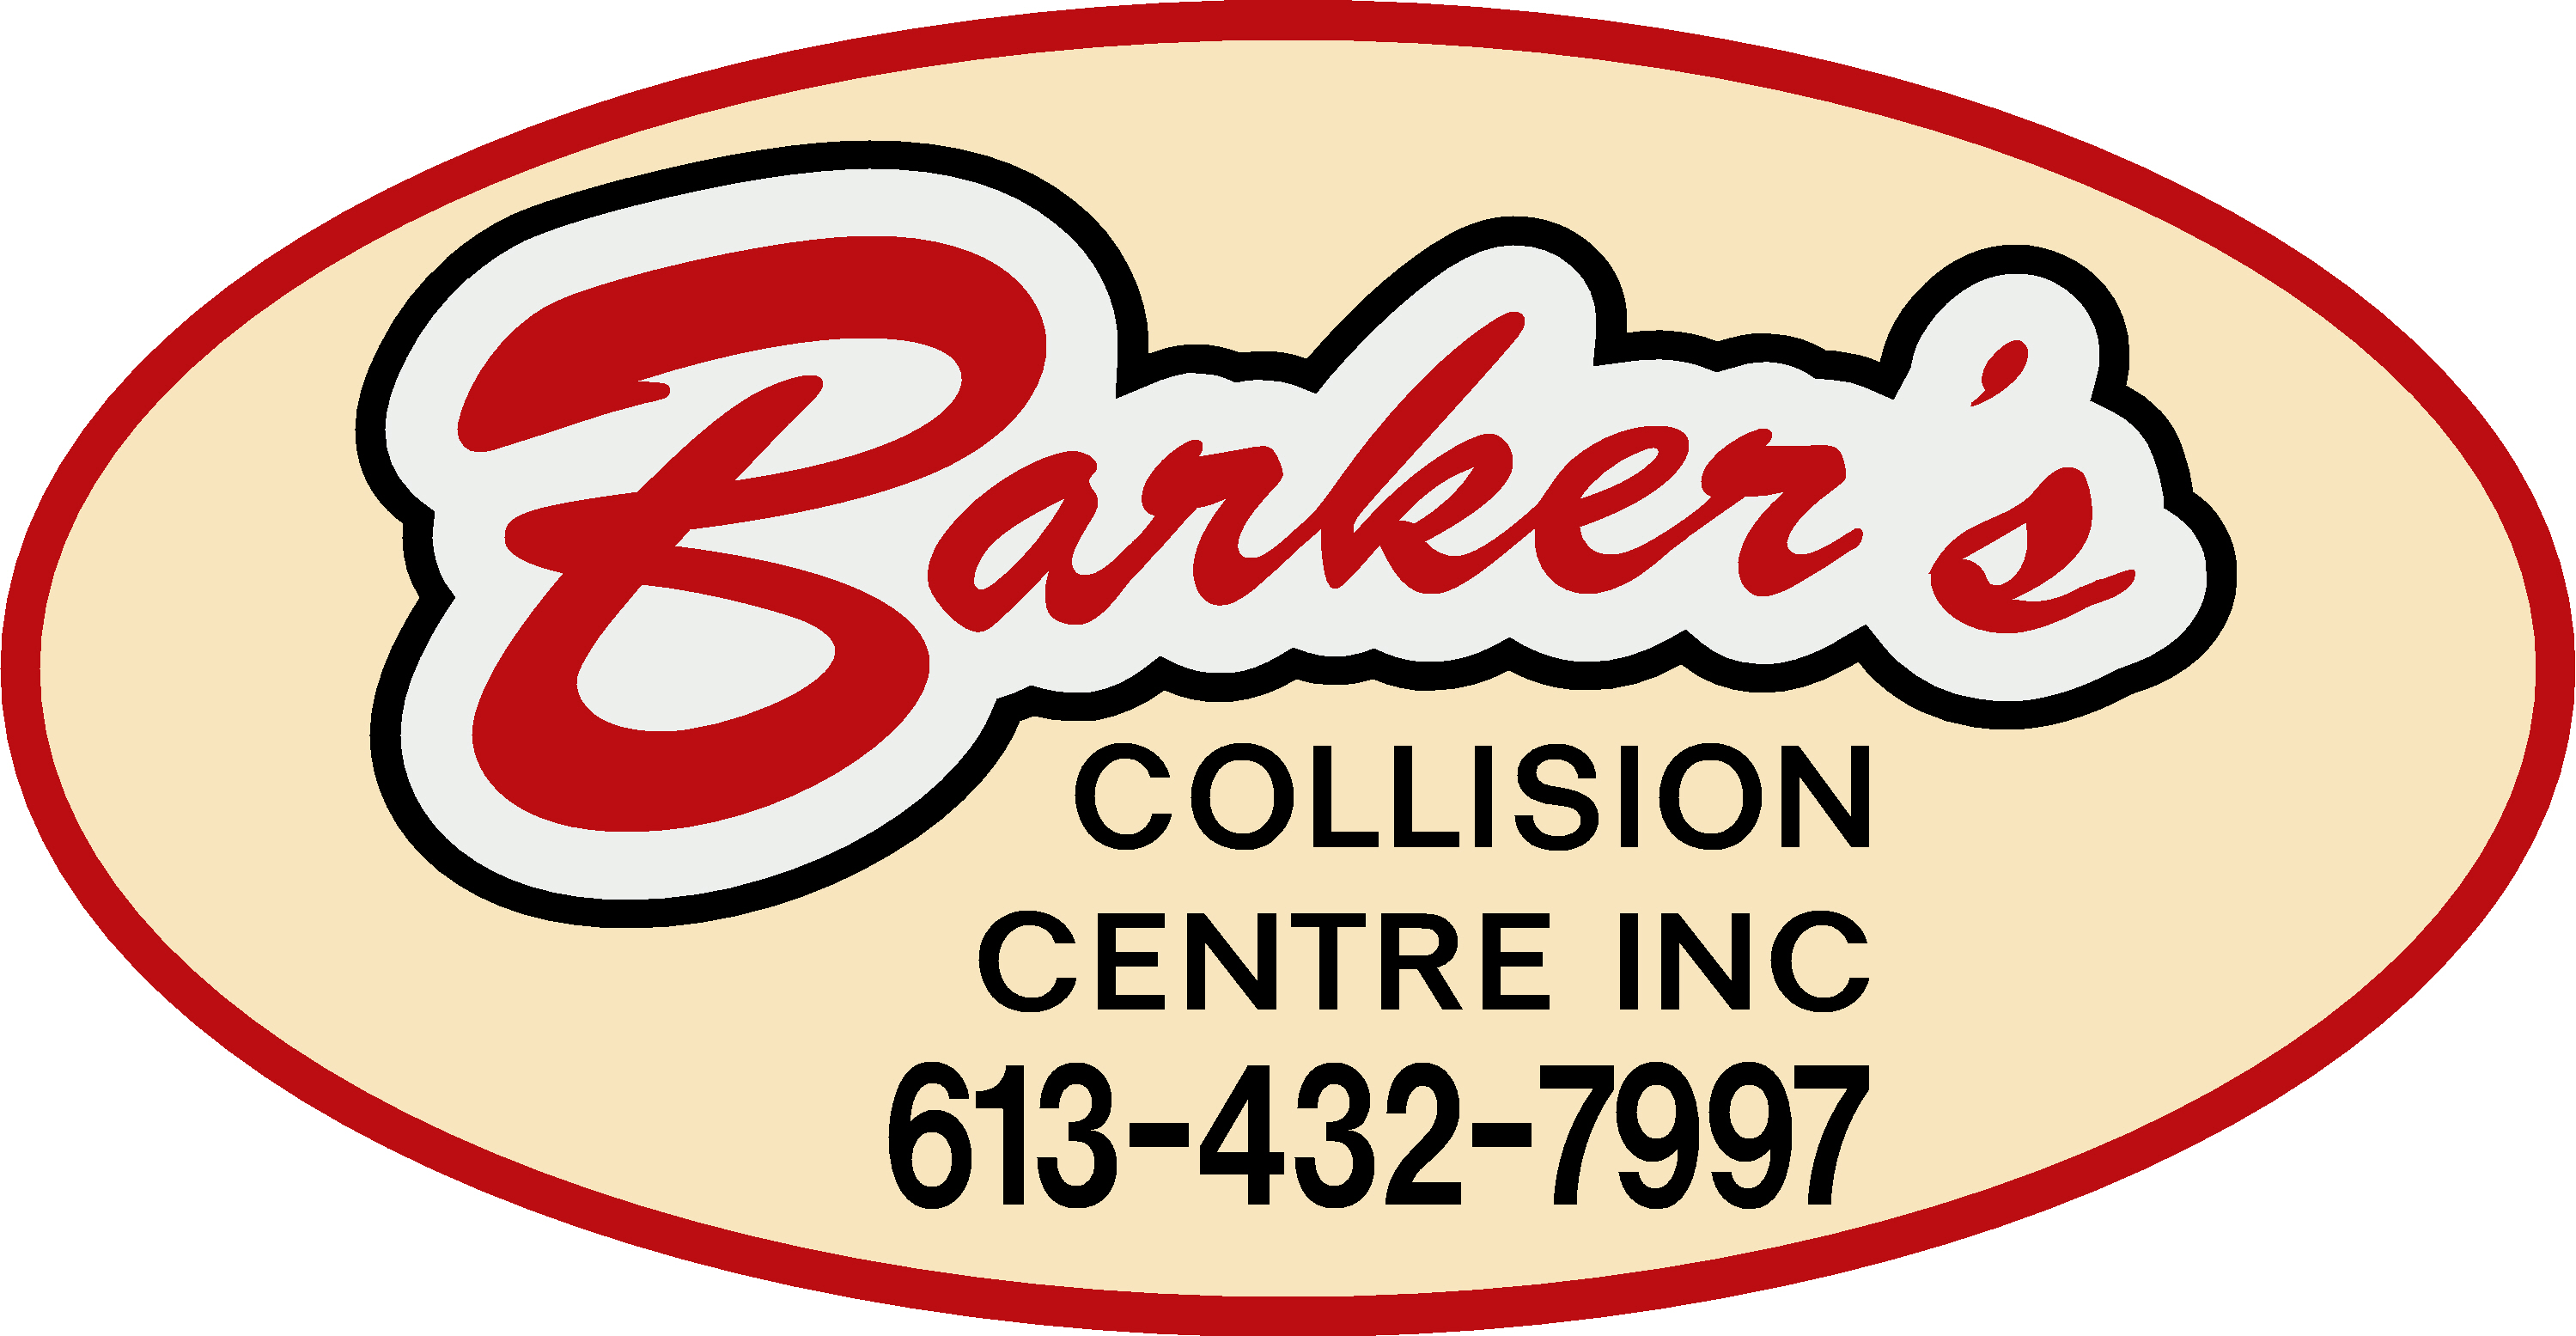 Barker's Collision Centre Inc.